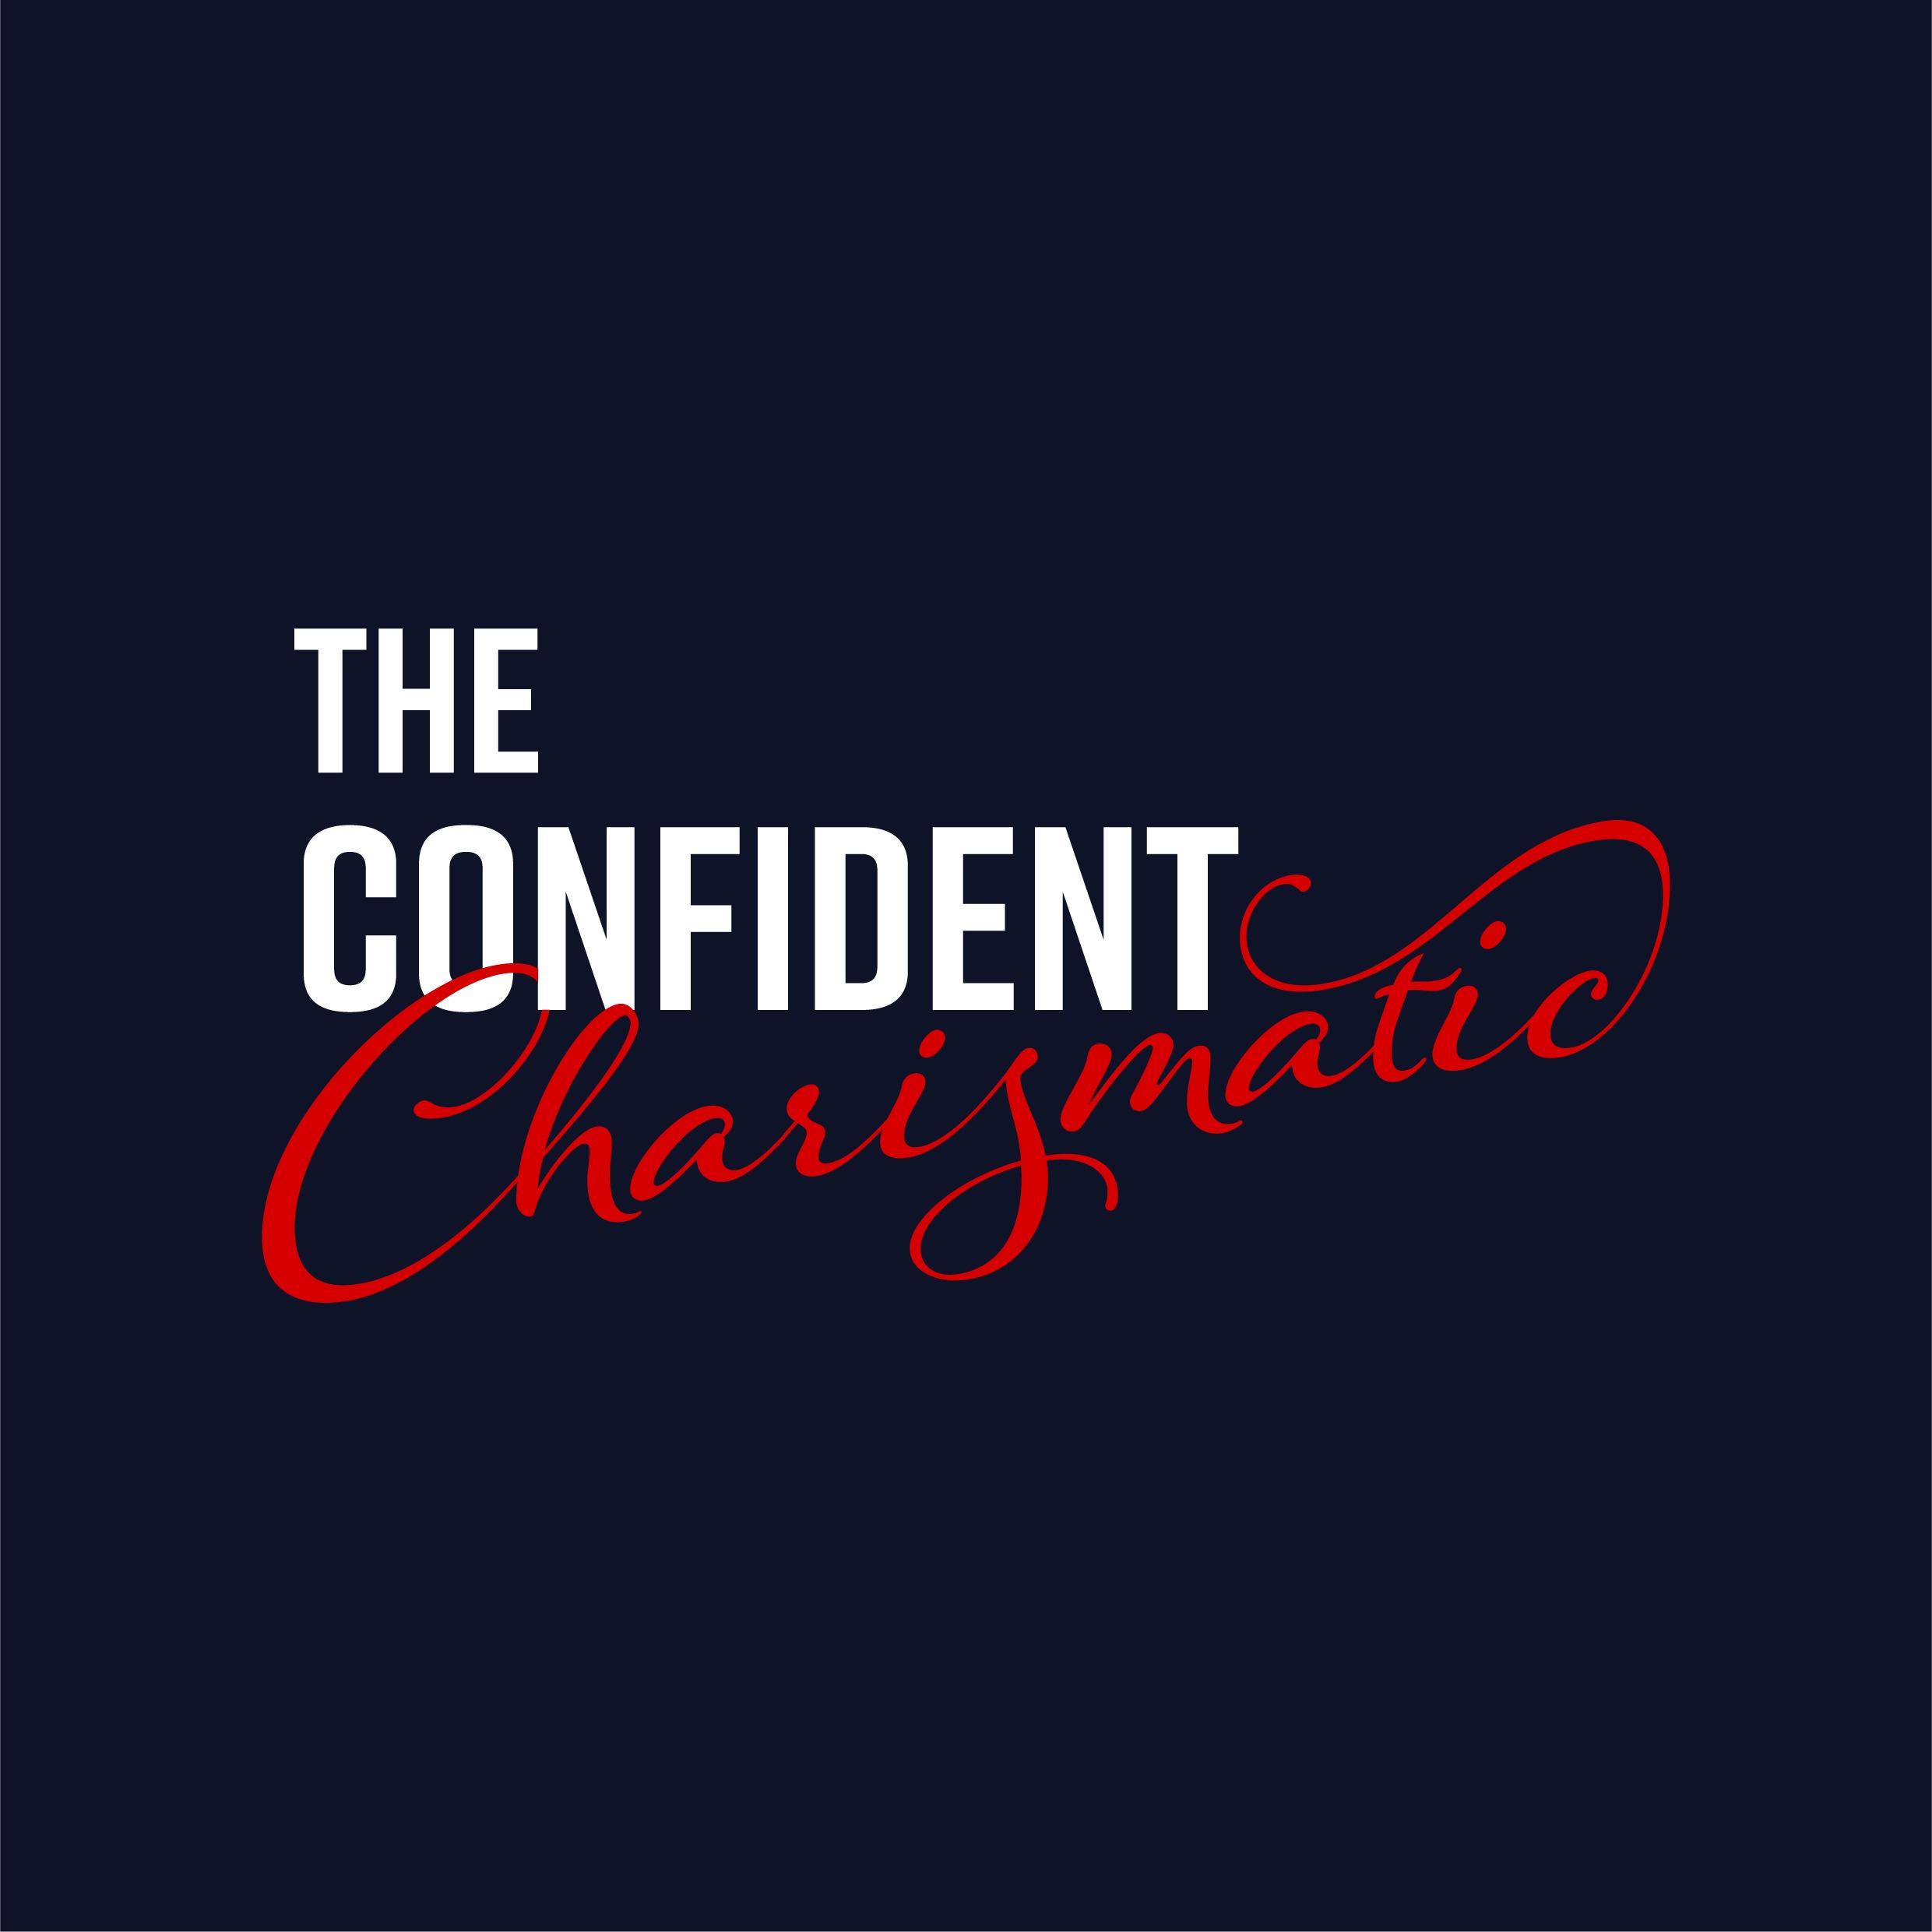 The Confident Charismatic